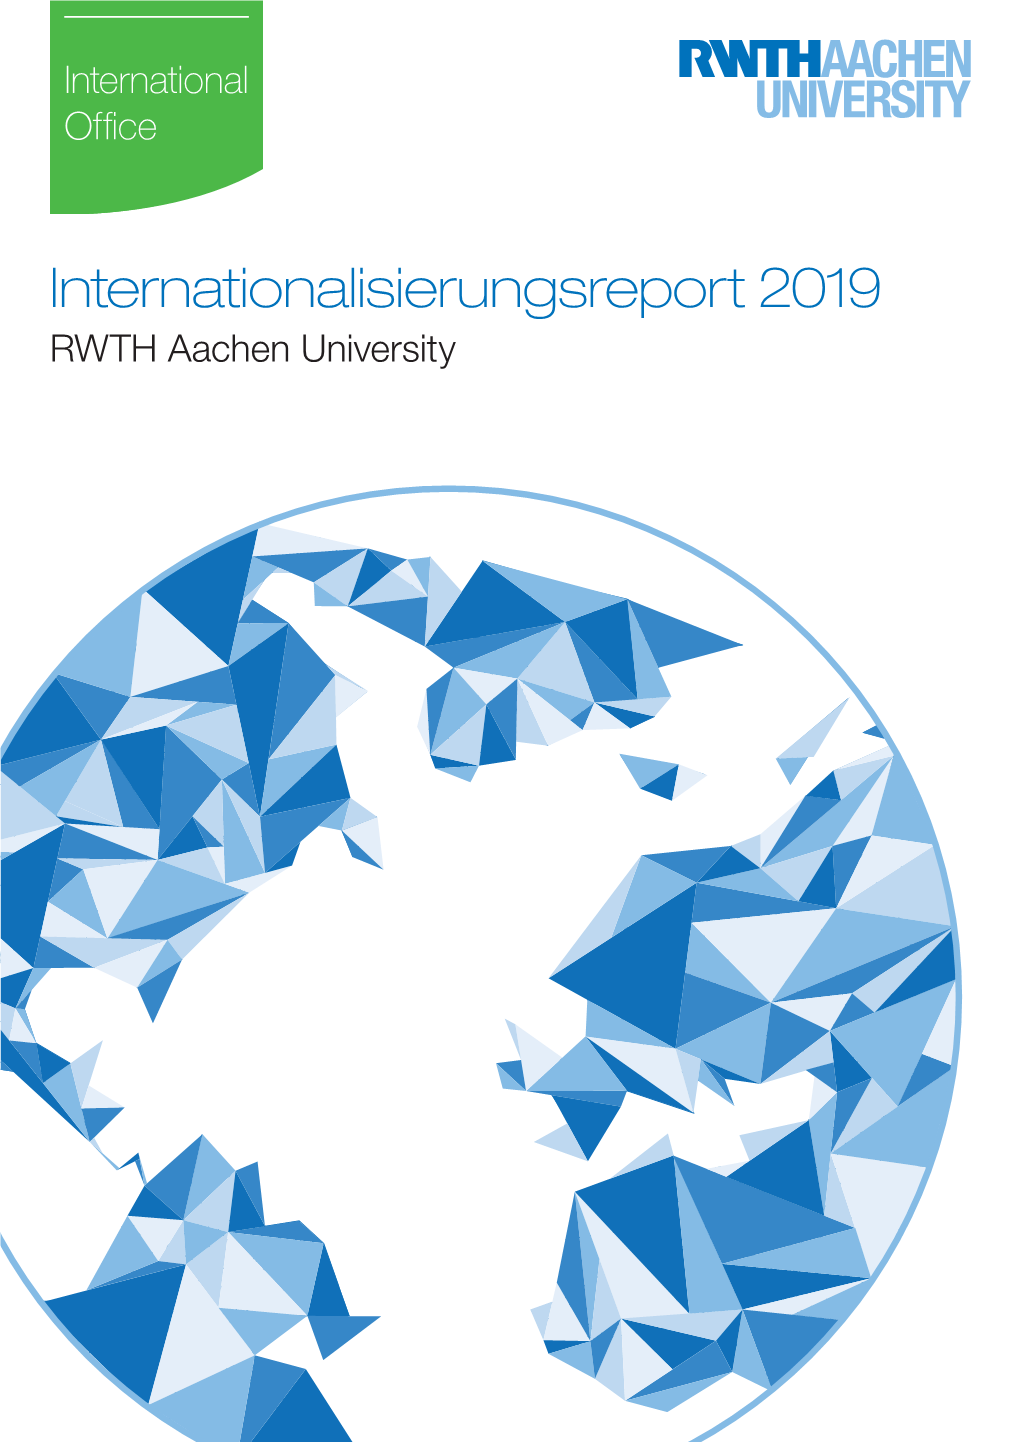 Internationalisierungsreport 2019 RWTH Aachen University World Class Means Worldwide